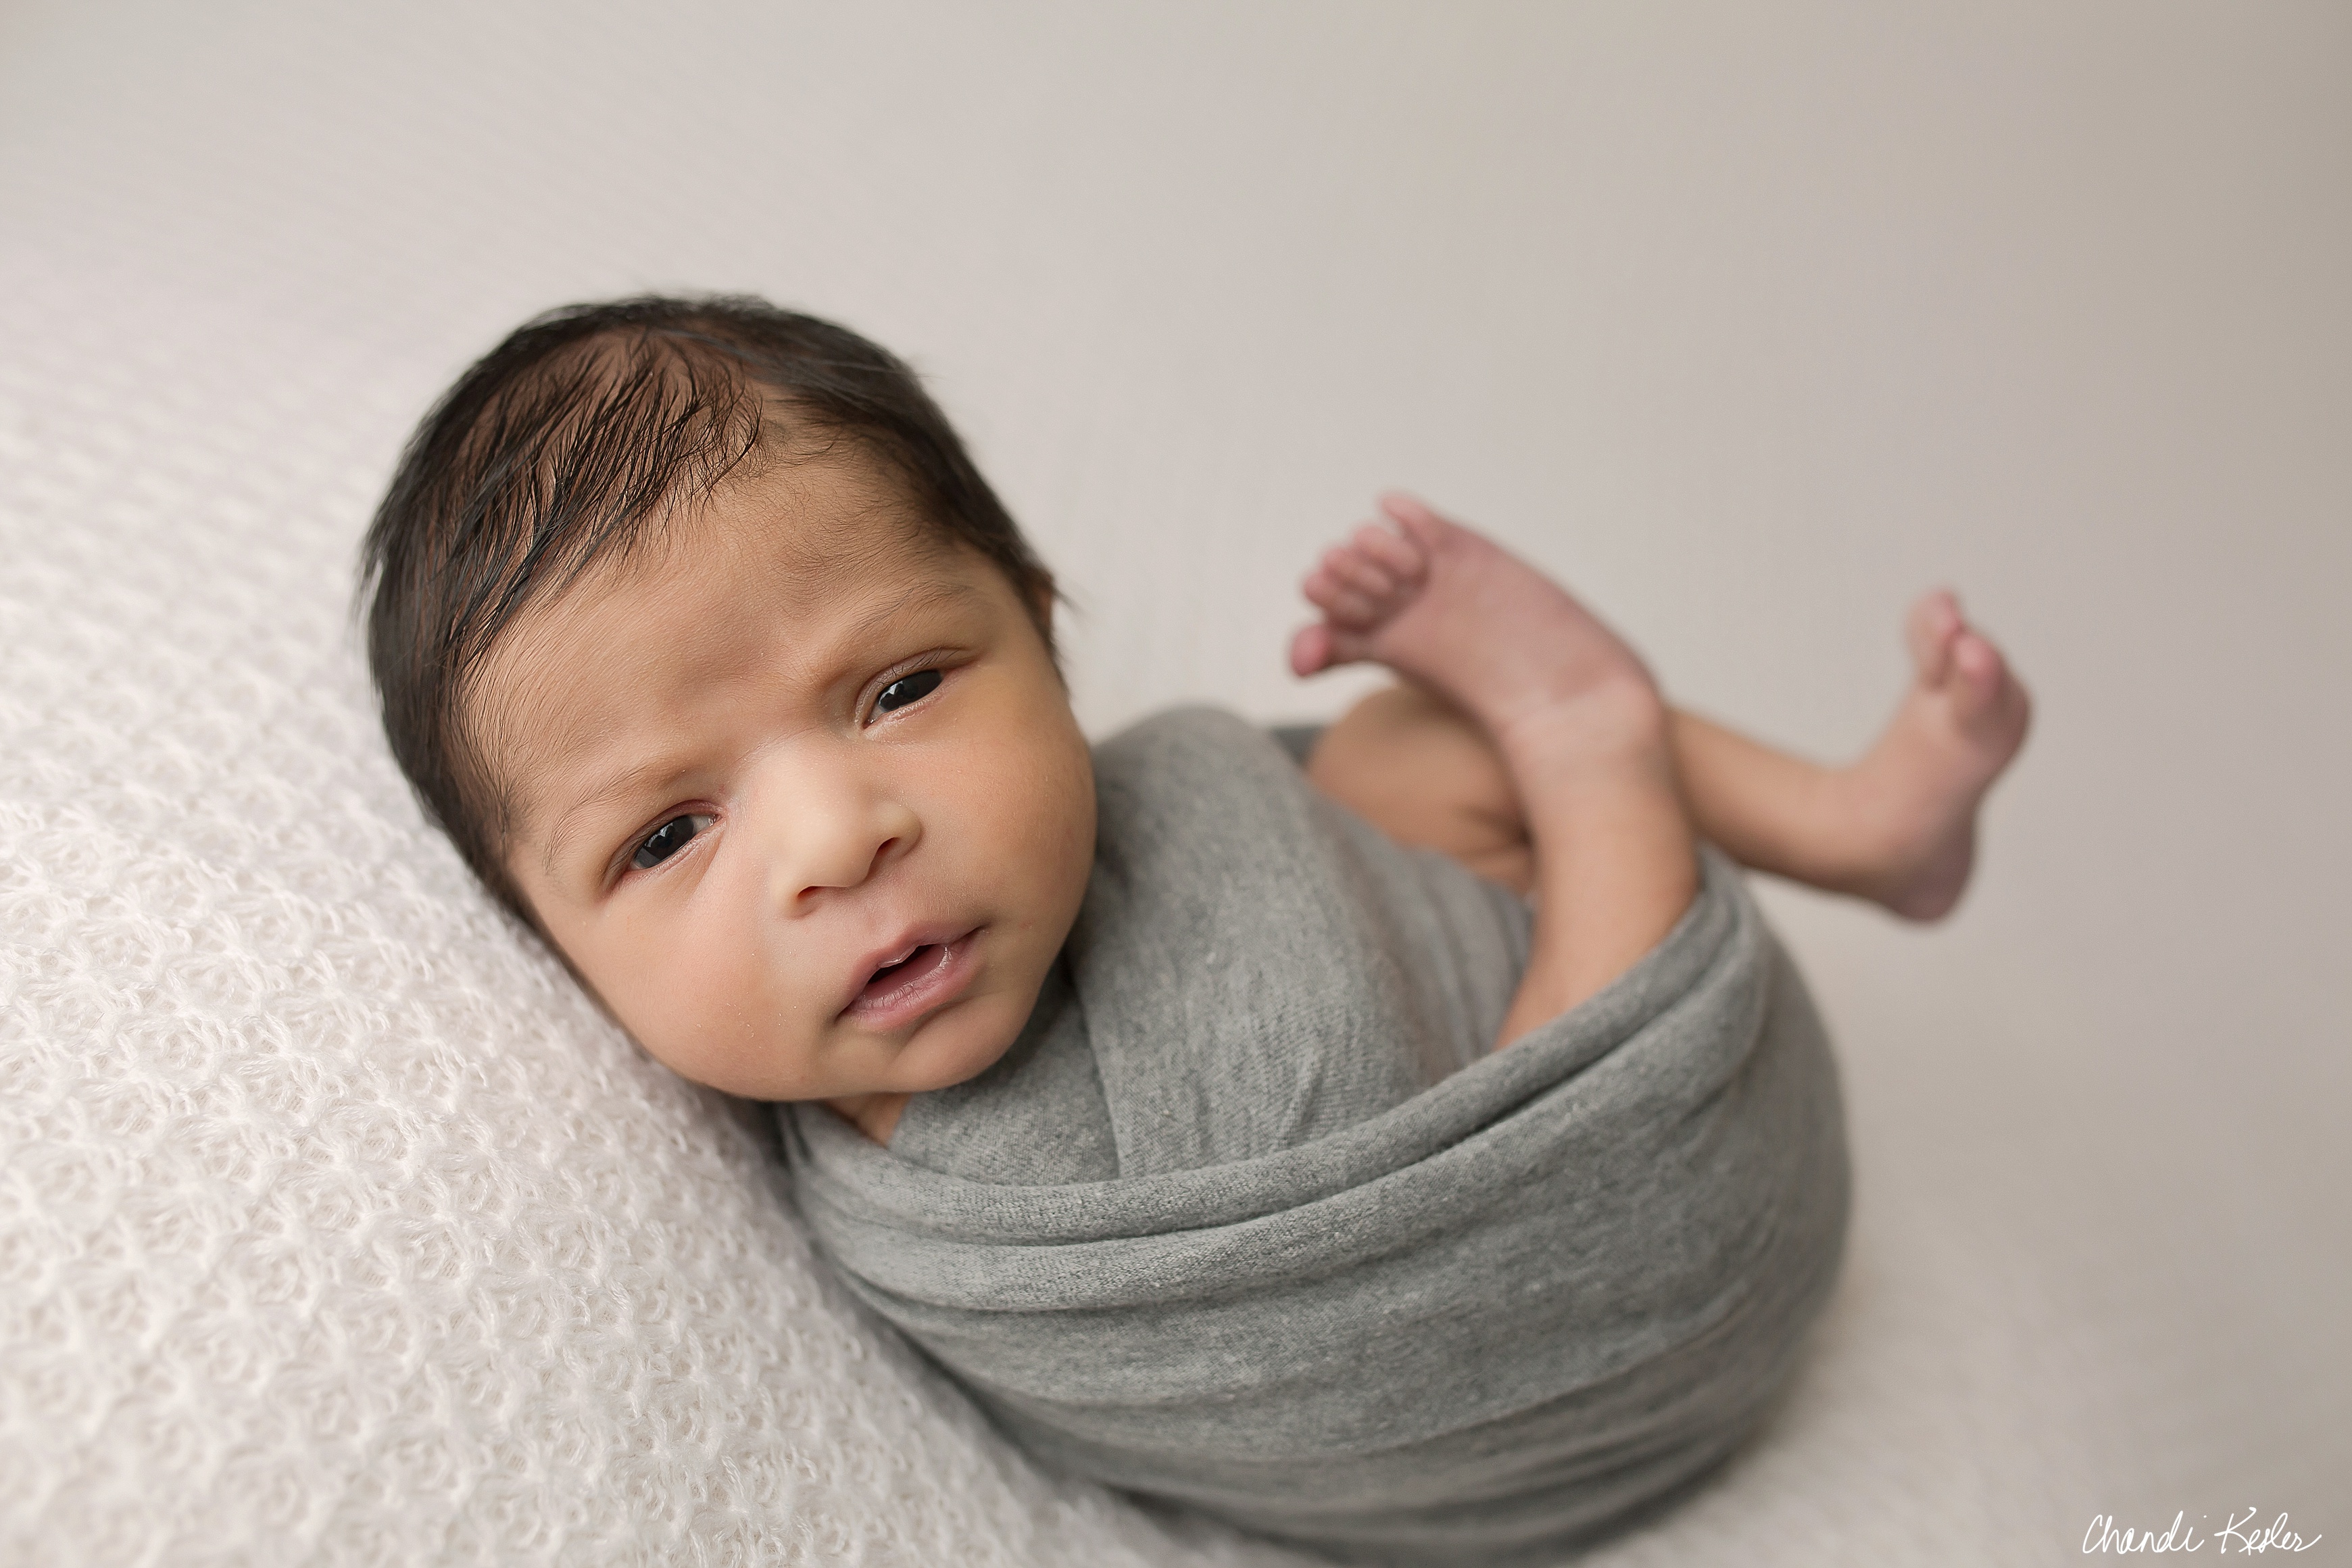 Clinton IL Newborn Photographer | Chandi Kesler Photography